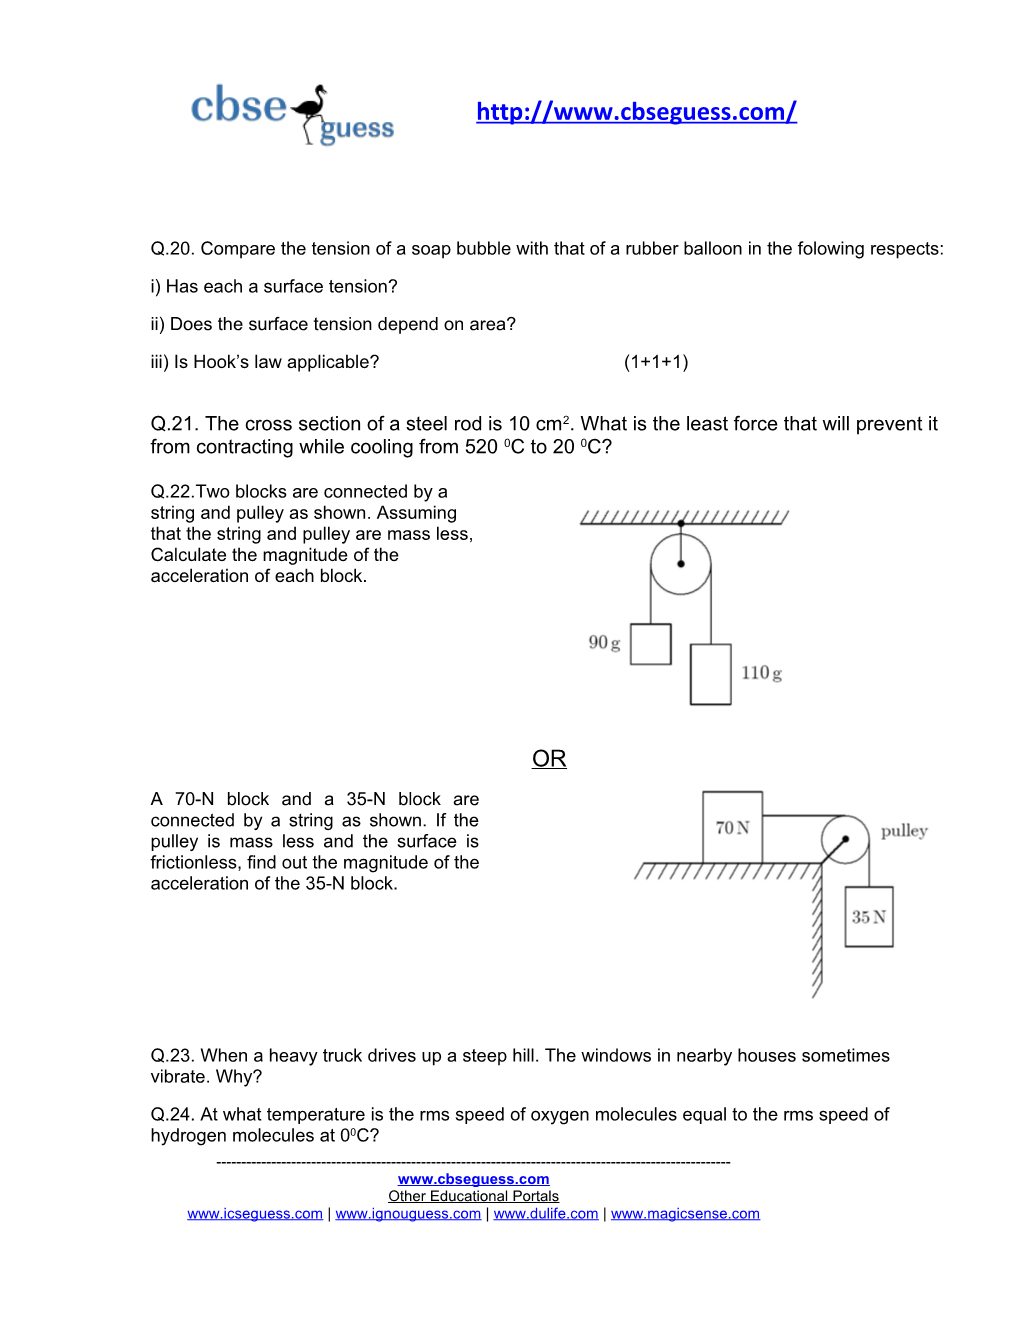 Sample Paper 2009 Class XI Subject Physics